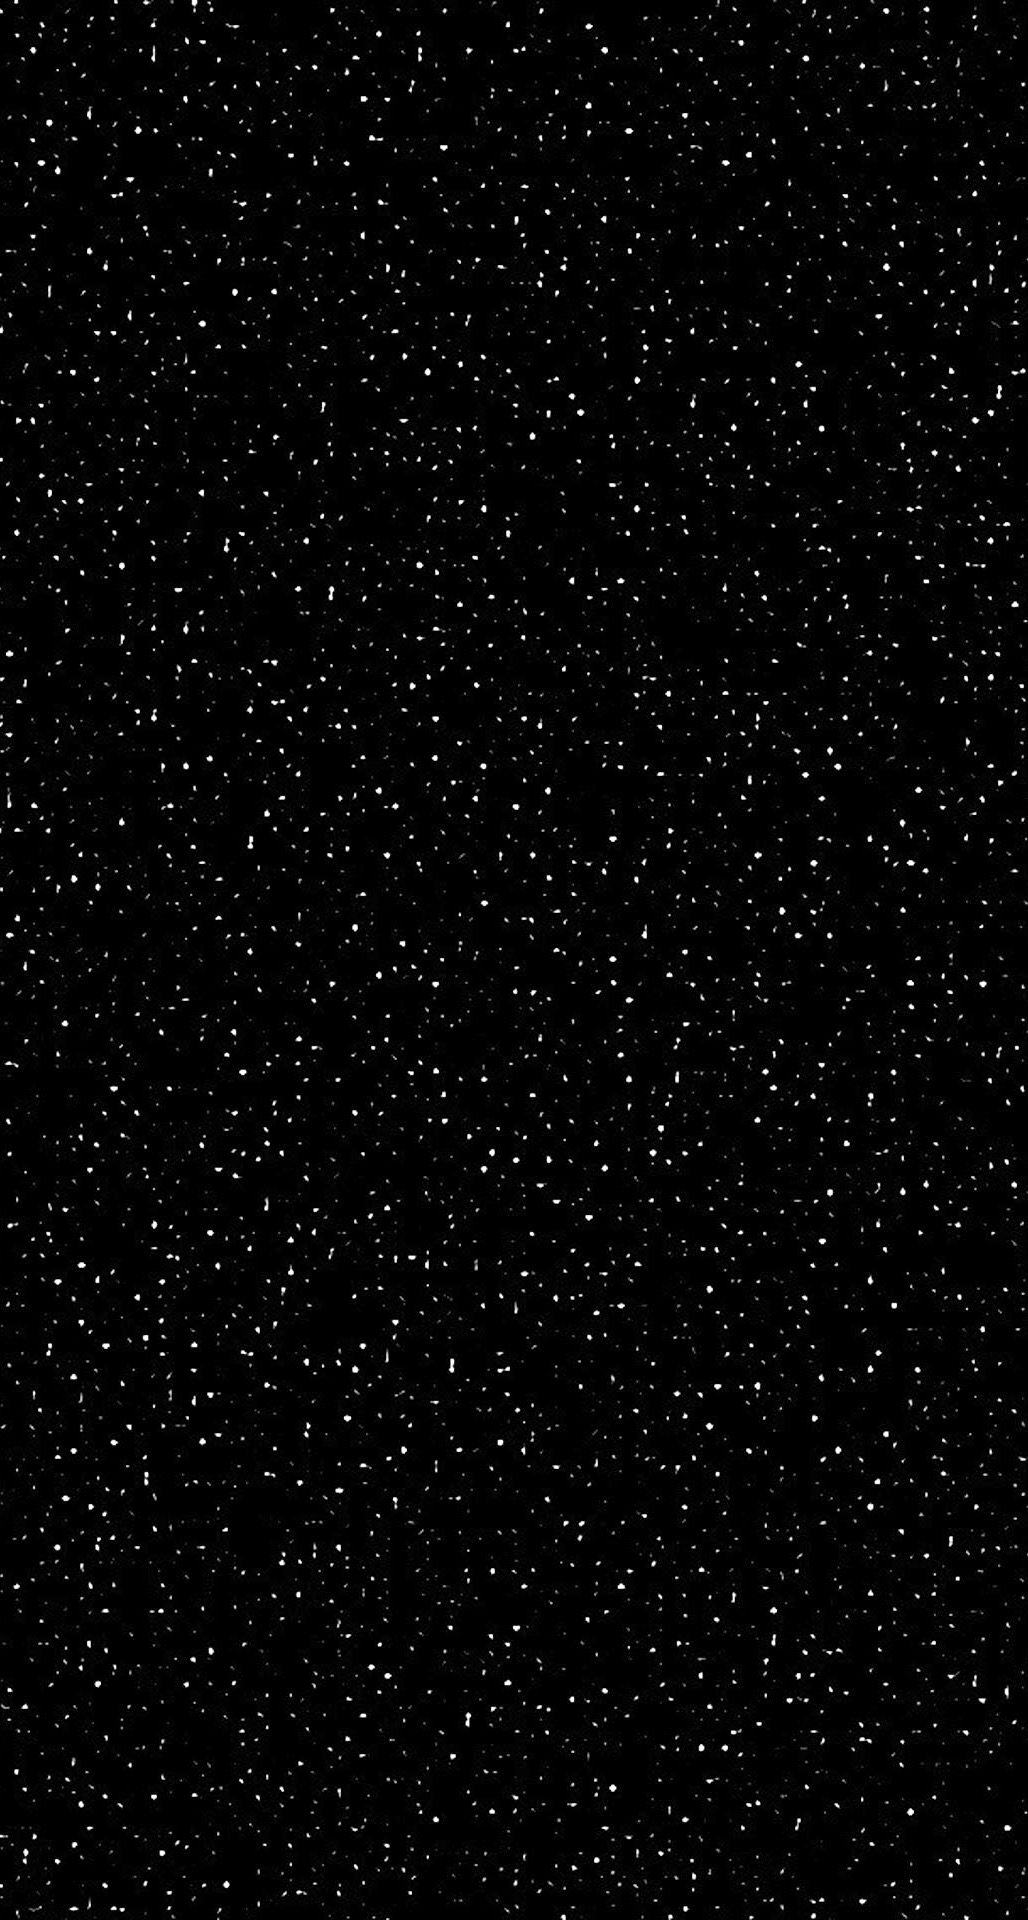 Simple Starry Sky Field iPhone 6 Plus HD Wallpaper